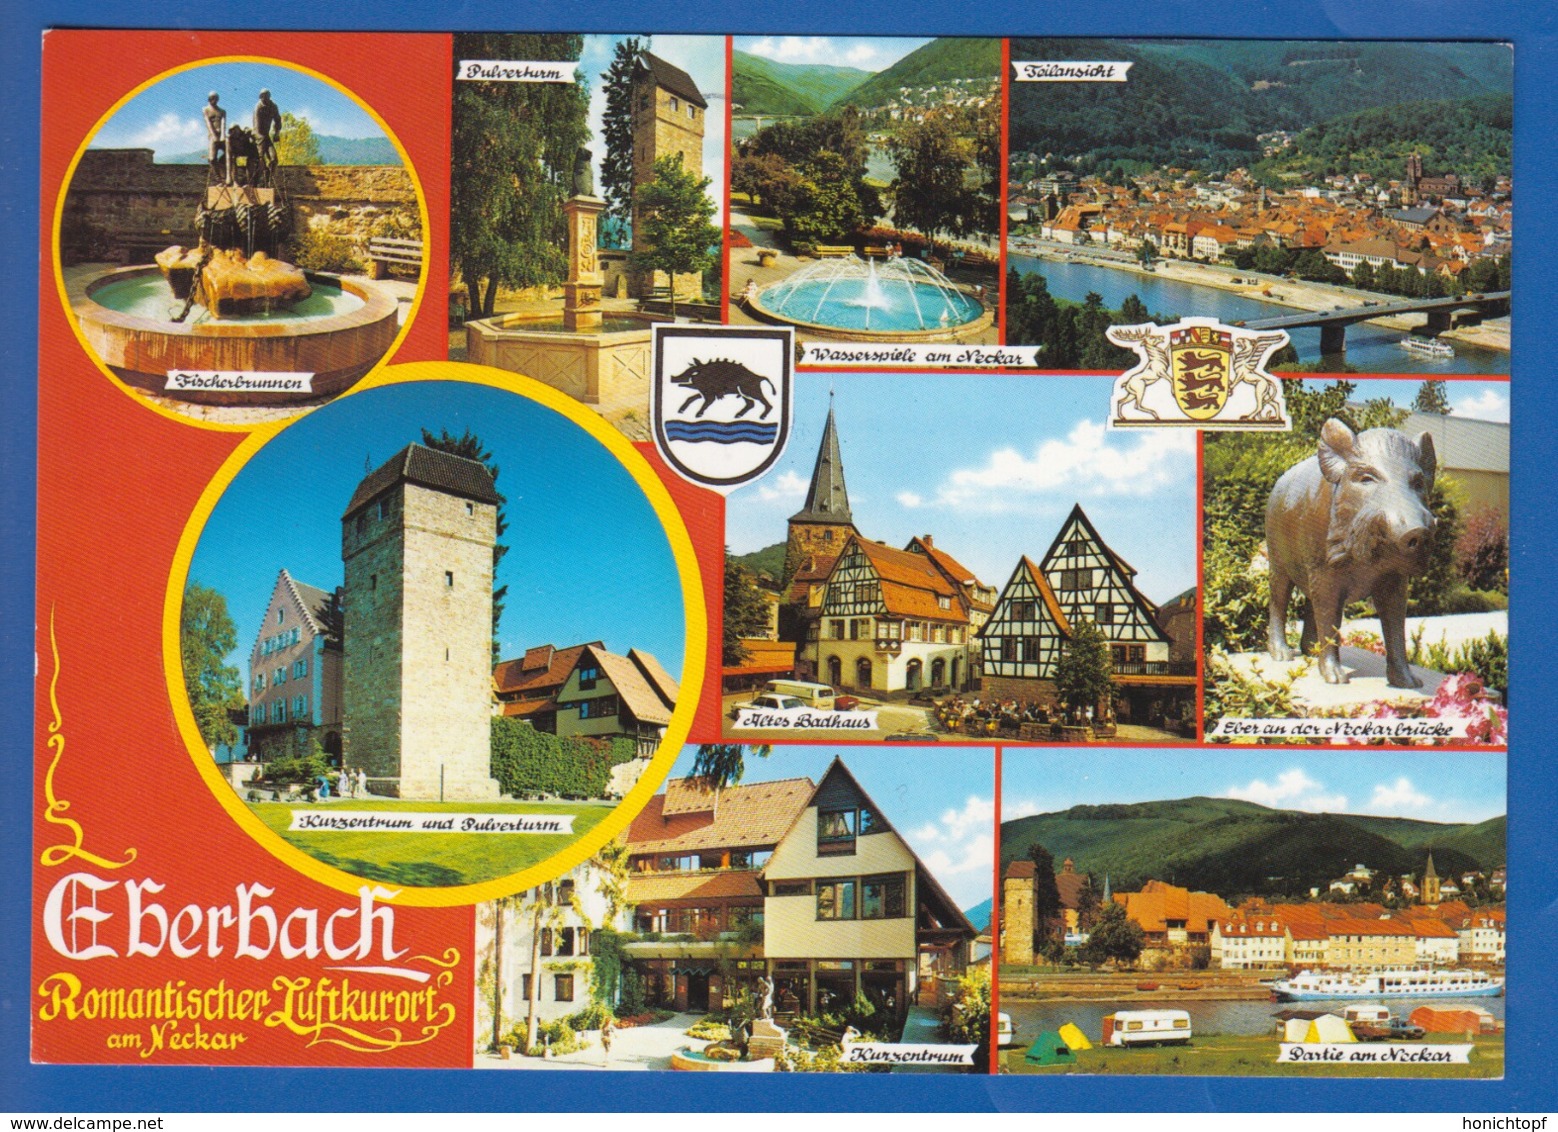 Deutschland; Eberbach Am Neckar; Multibildkarte - Eberbach